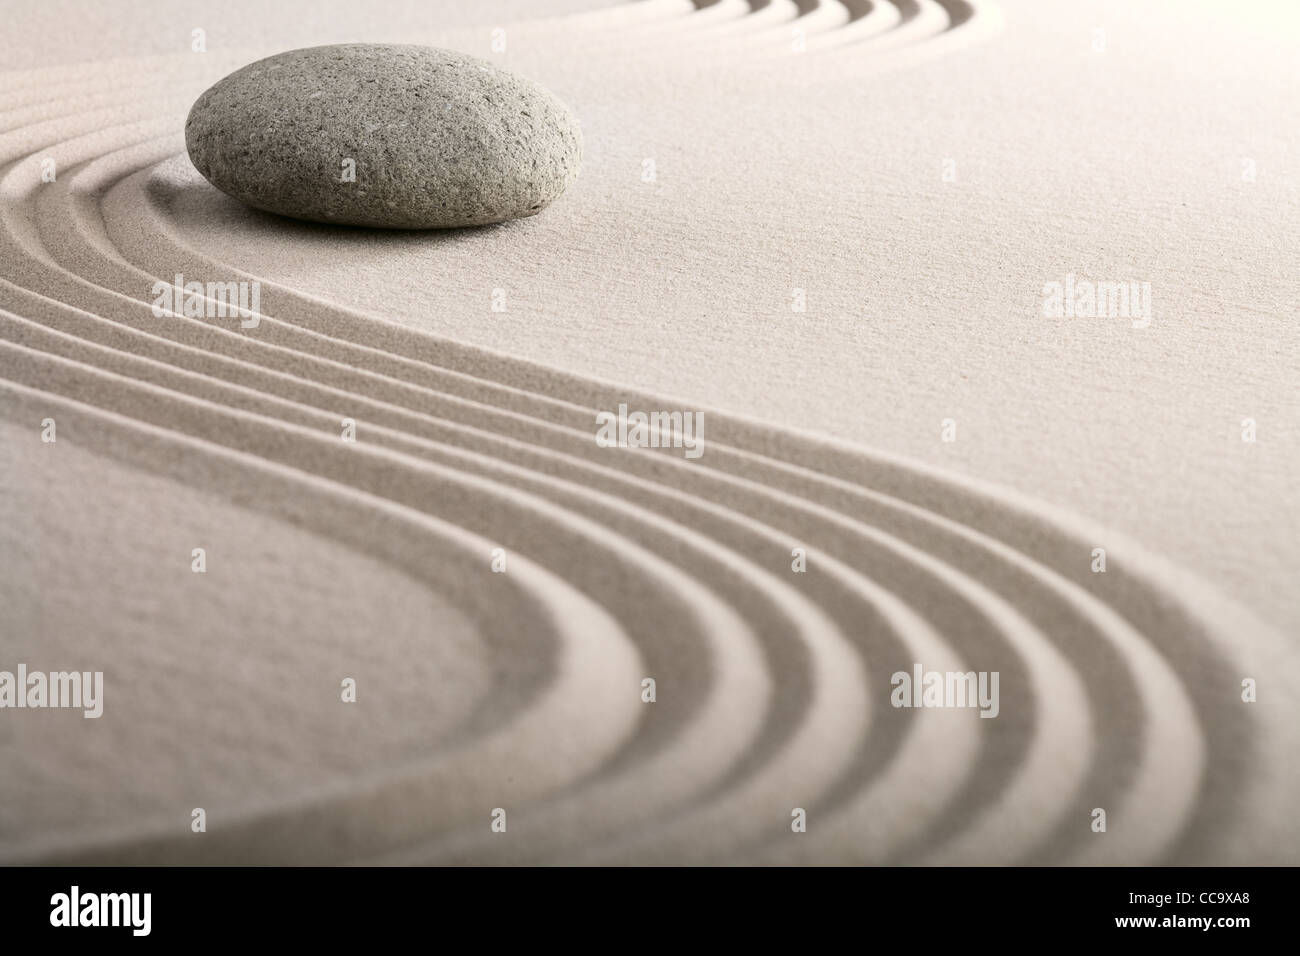 zen sand stone garden japanese meditation relaxation and spa image spiritual balance round rock Stock Photo